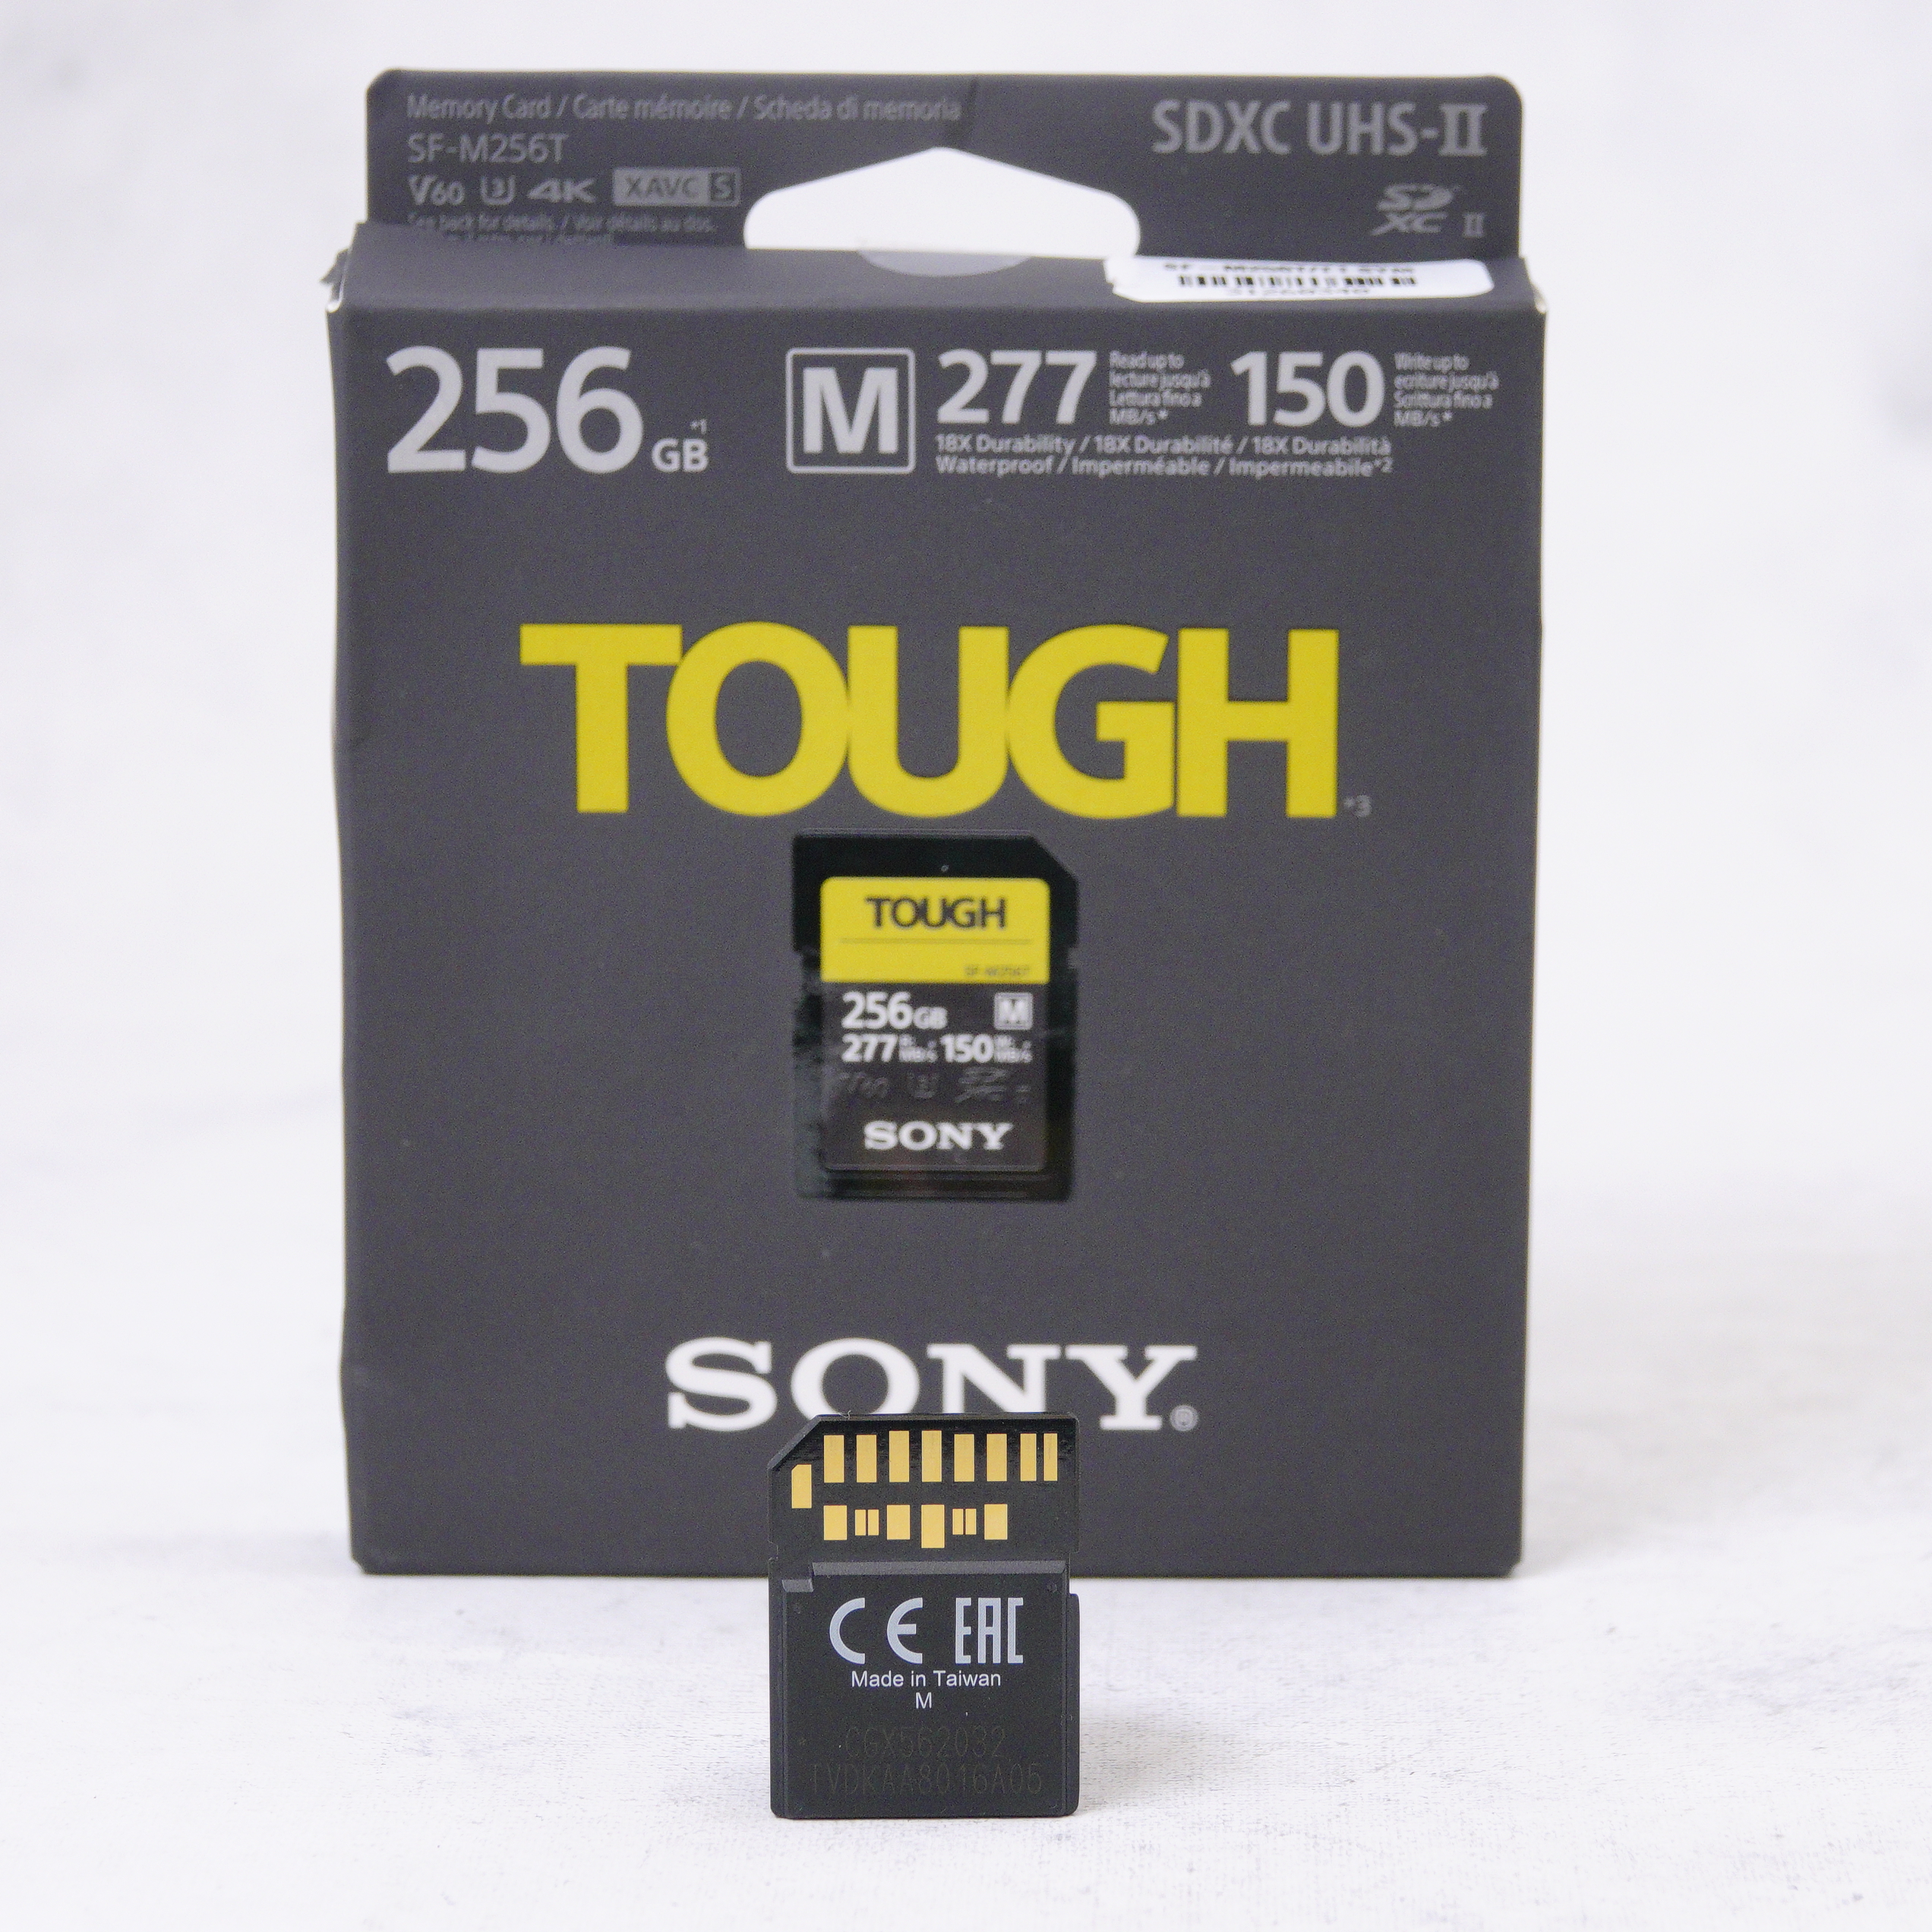 Tarjeta de memoria SDXC Sony 256 GB SF-M Tough Series UHS-II - Usado